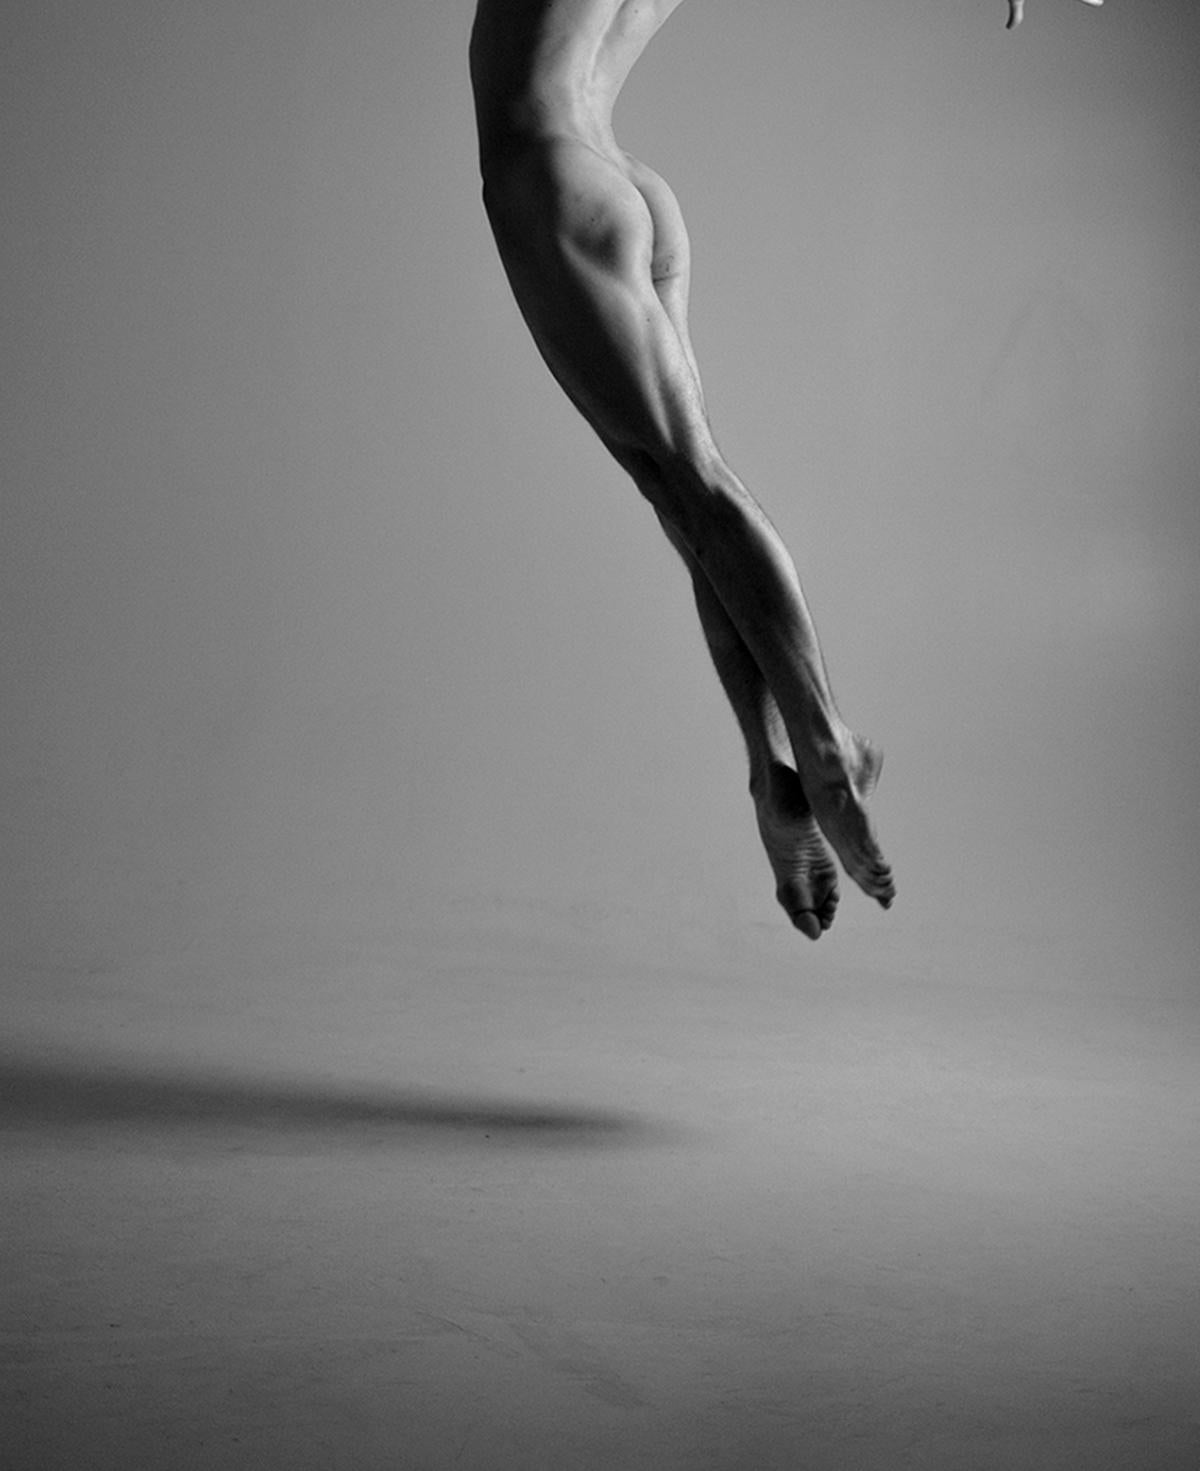 Apertura II. The Bailarín, series. Male Nude dancer Black & White photograph - Modern Photograph by Ricky Cohete